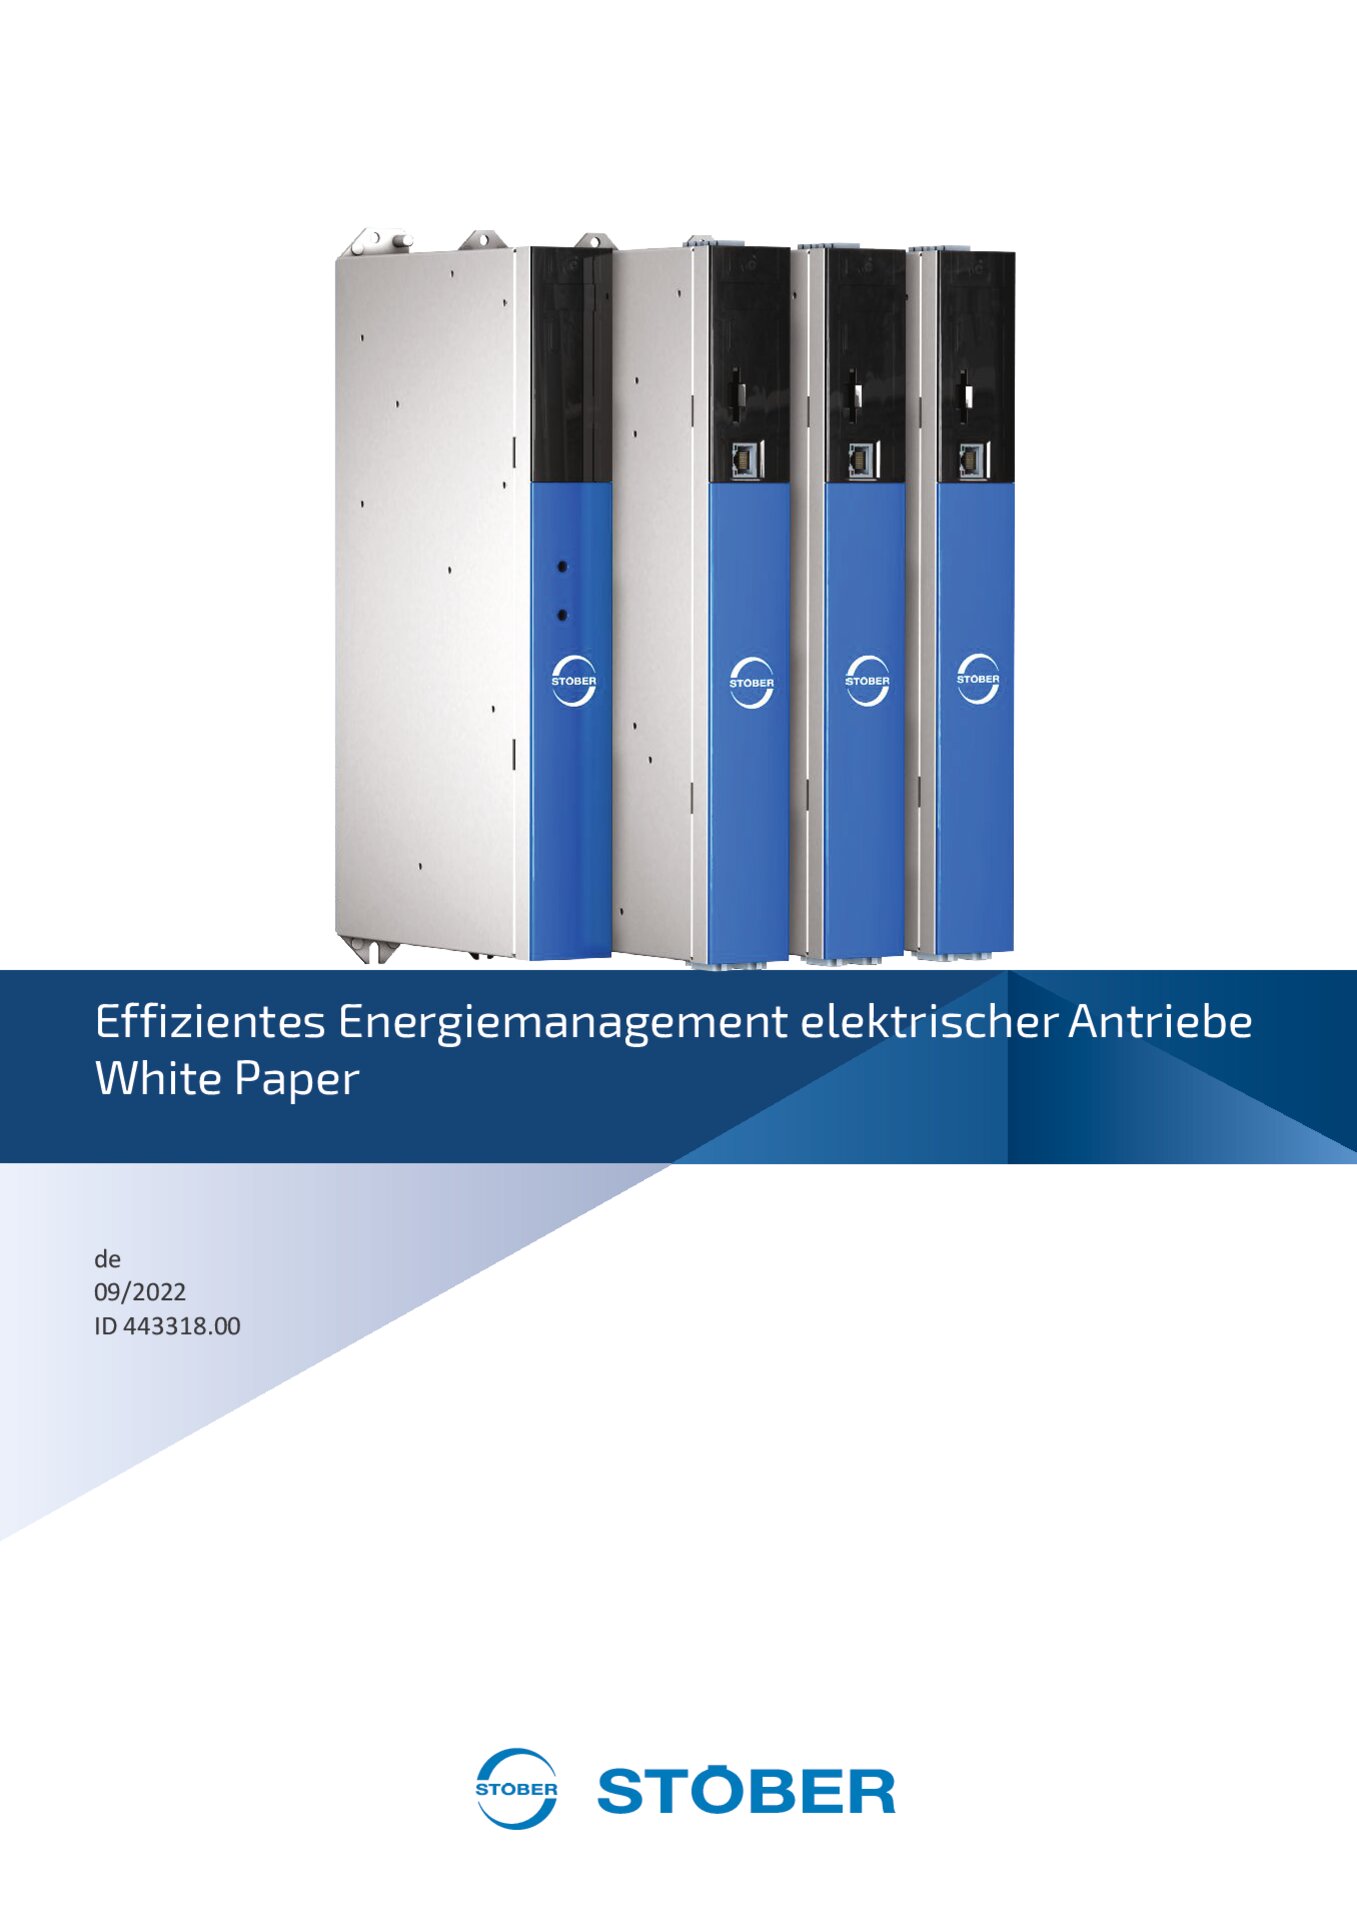 White Paper Energiemanagement